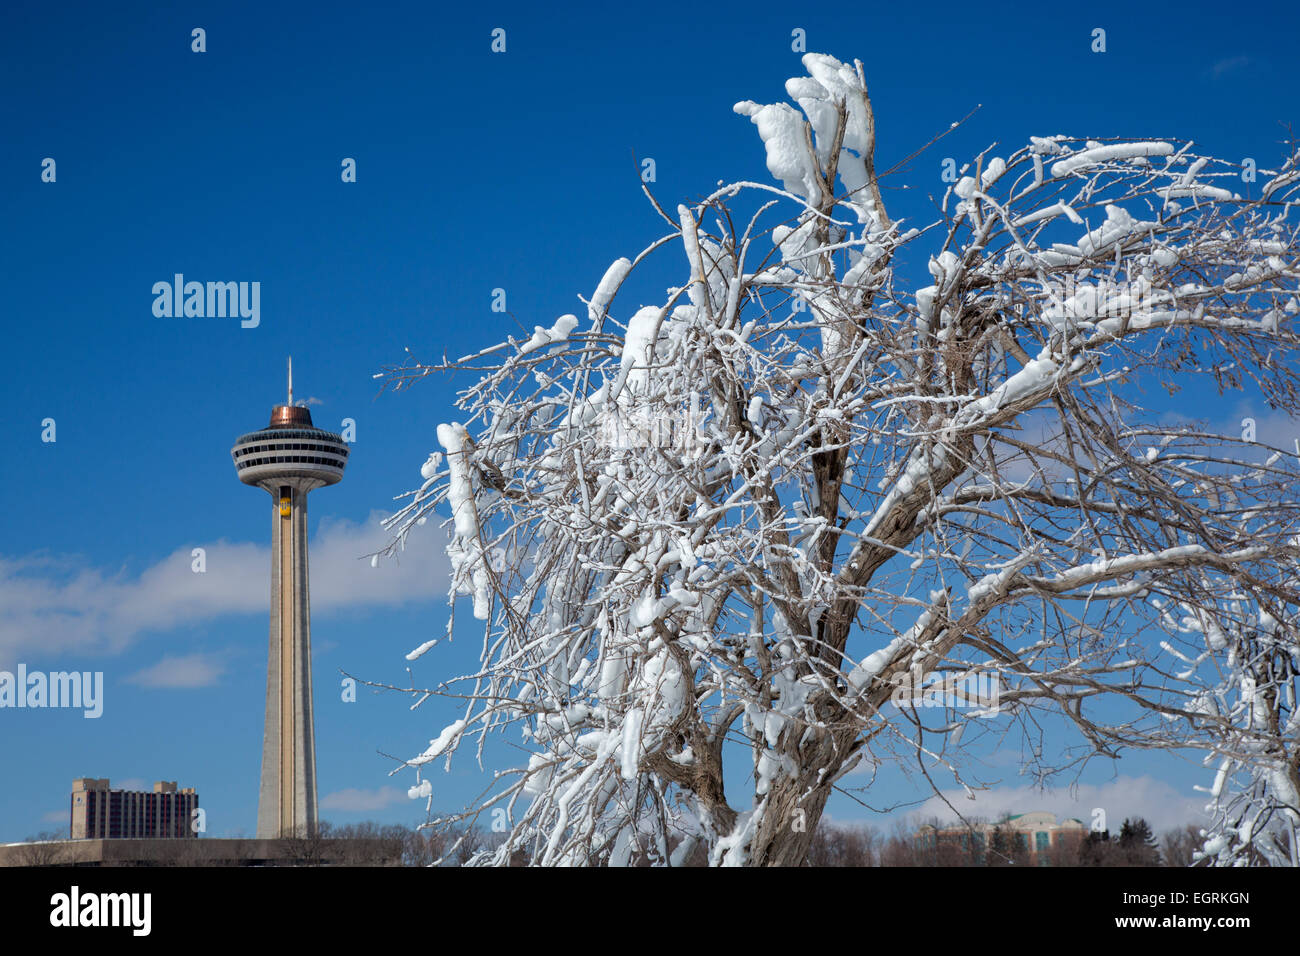 Niagara Falls, New York - A tree coated in ice from spray from Niagara Falls frames the Skylon Tower. Stock Photo